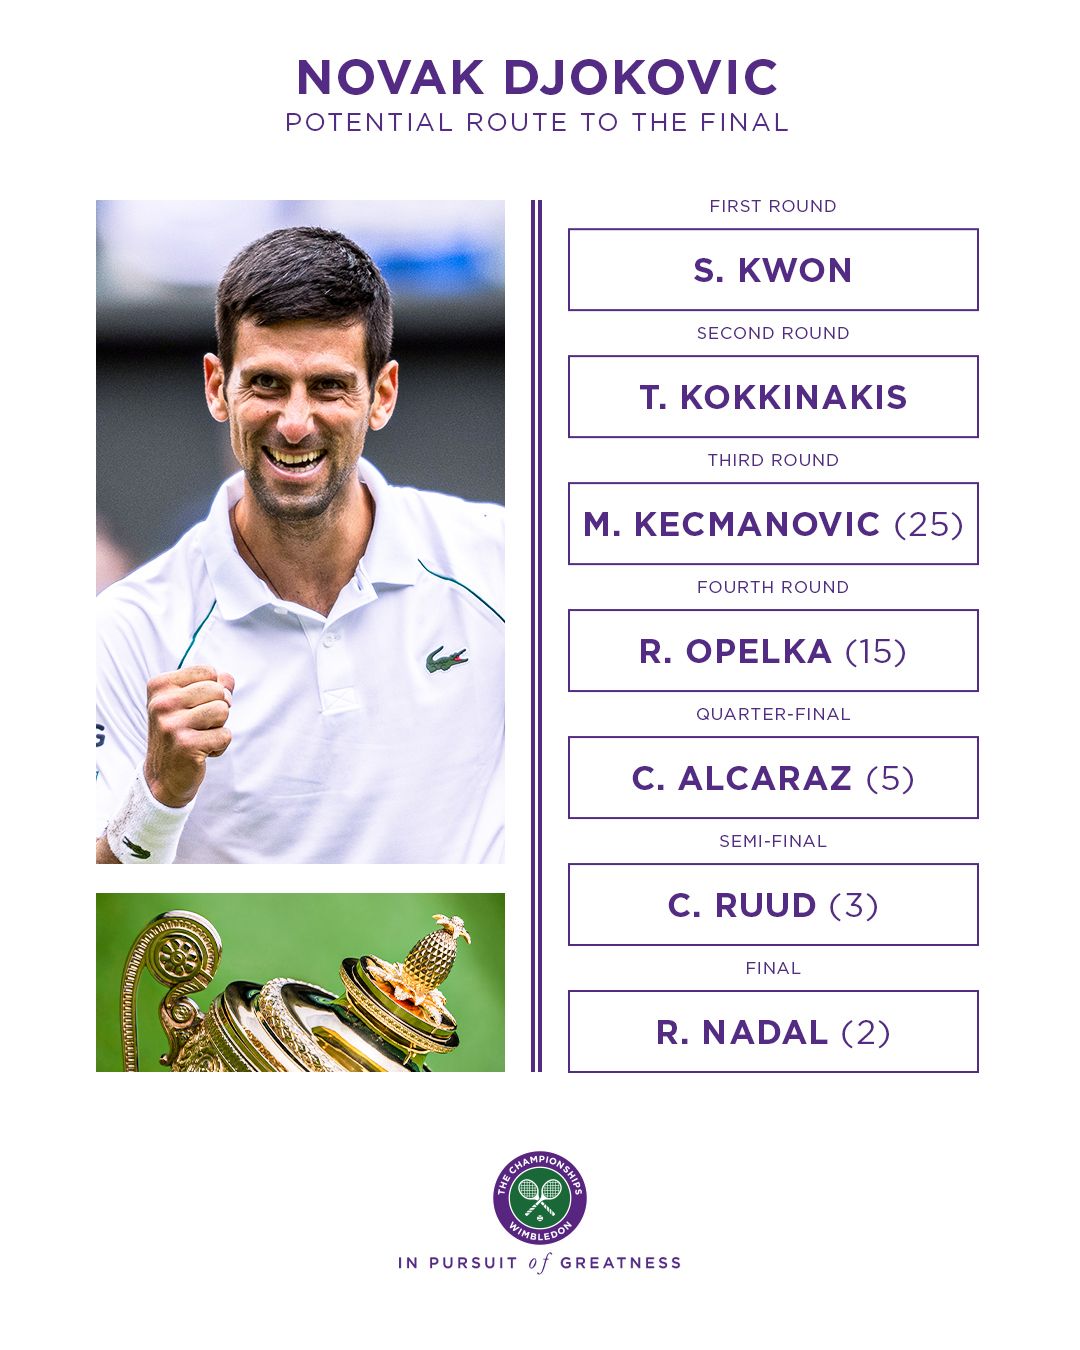 Wimbledon 2022: Rafael Nadal &amp; Novak Djokovic's potential route to final